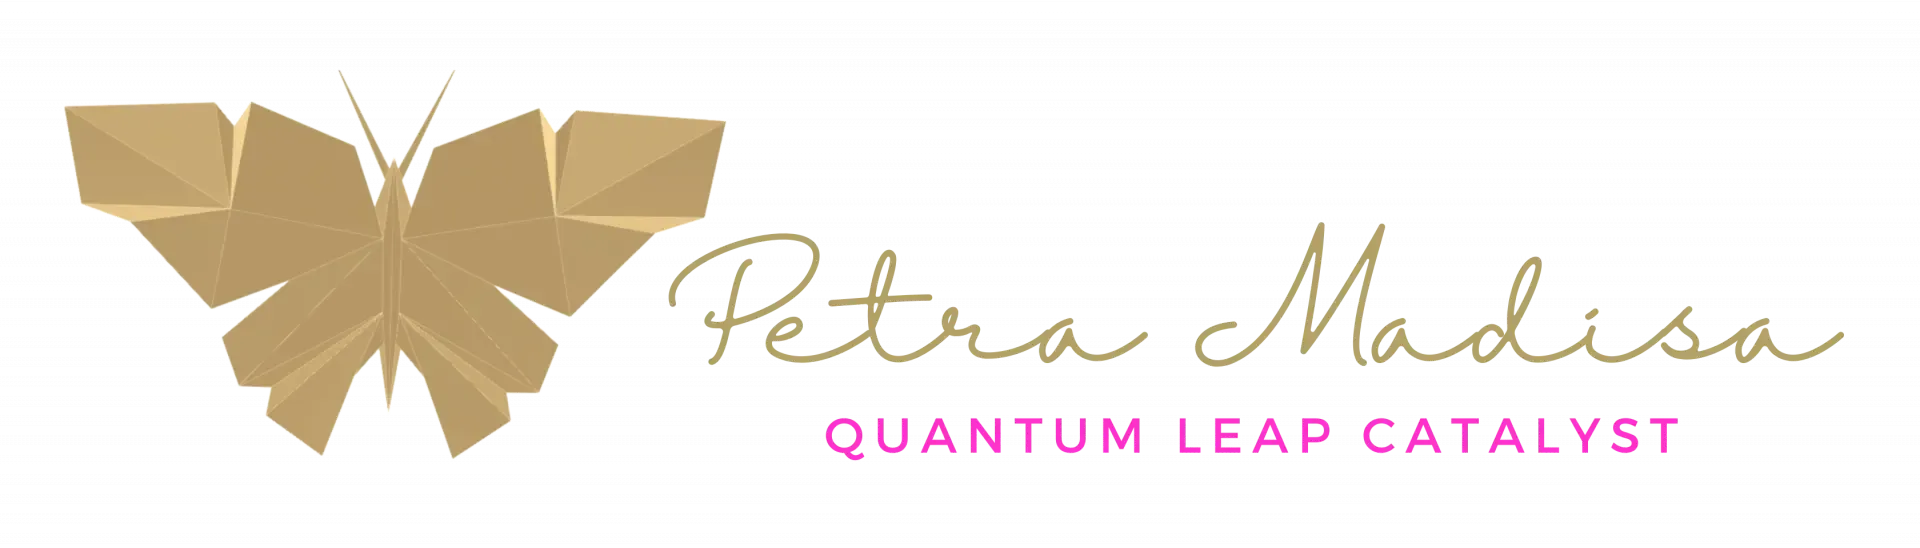 Petra Madisa logo home page